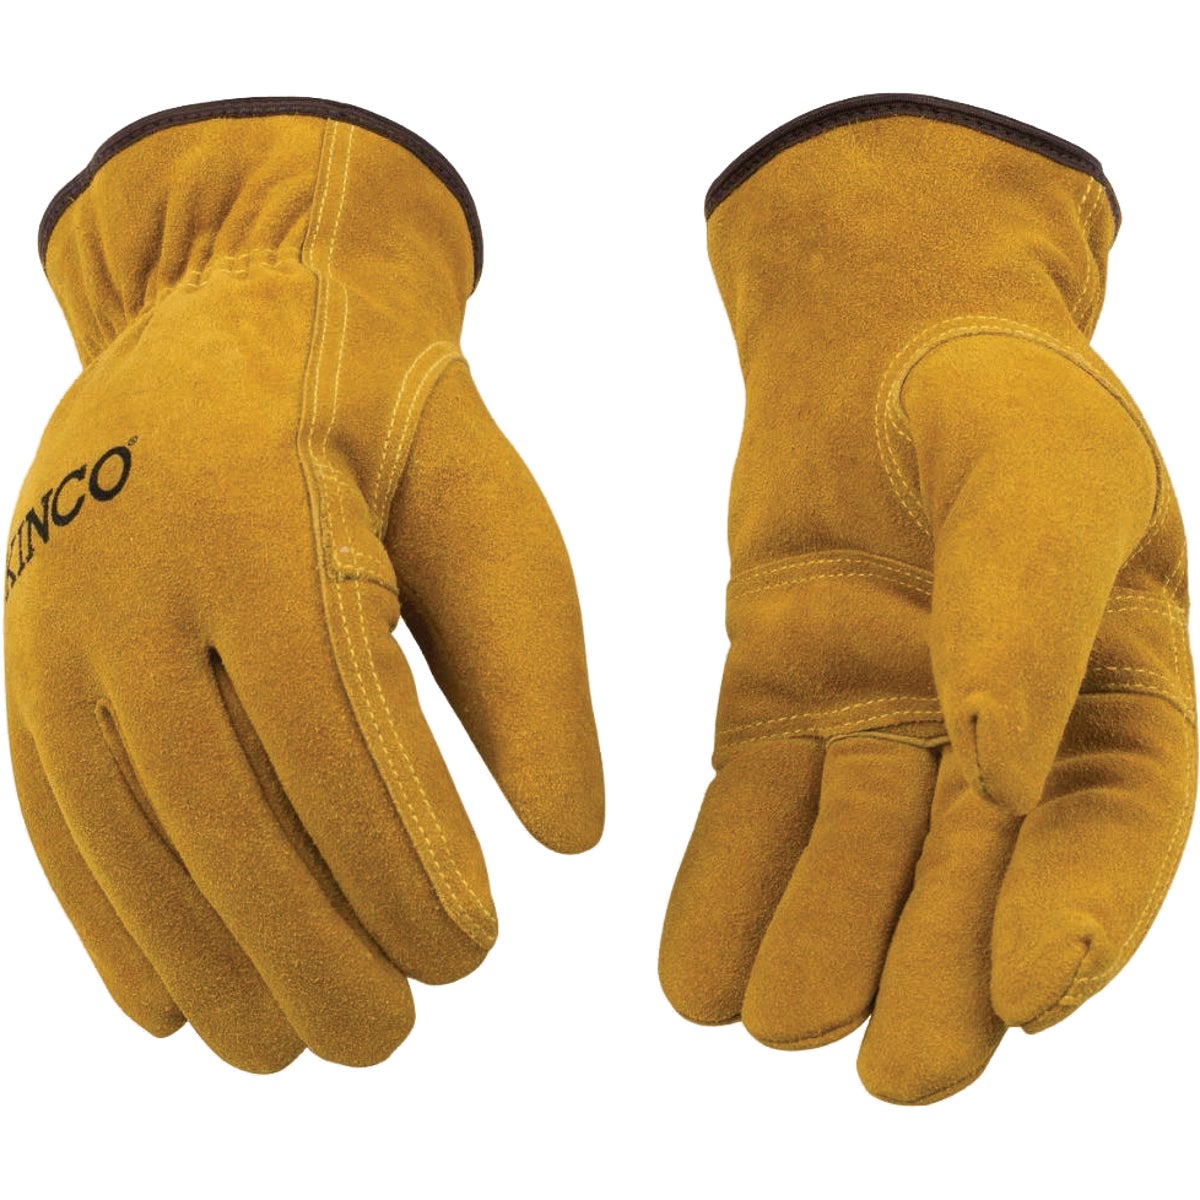 Kinco Men's Large Suede Cowhide Winter Work Glove